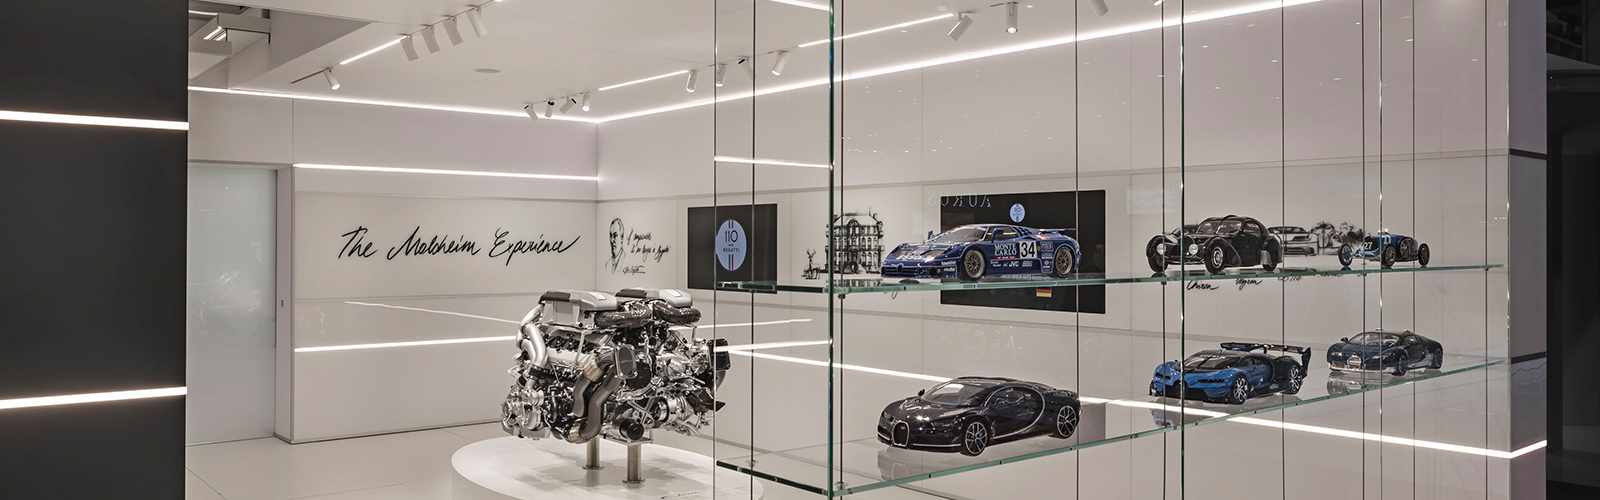 Braunwagner Bugatti Geneva Motorshow Design 2019